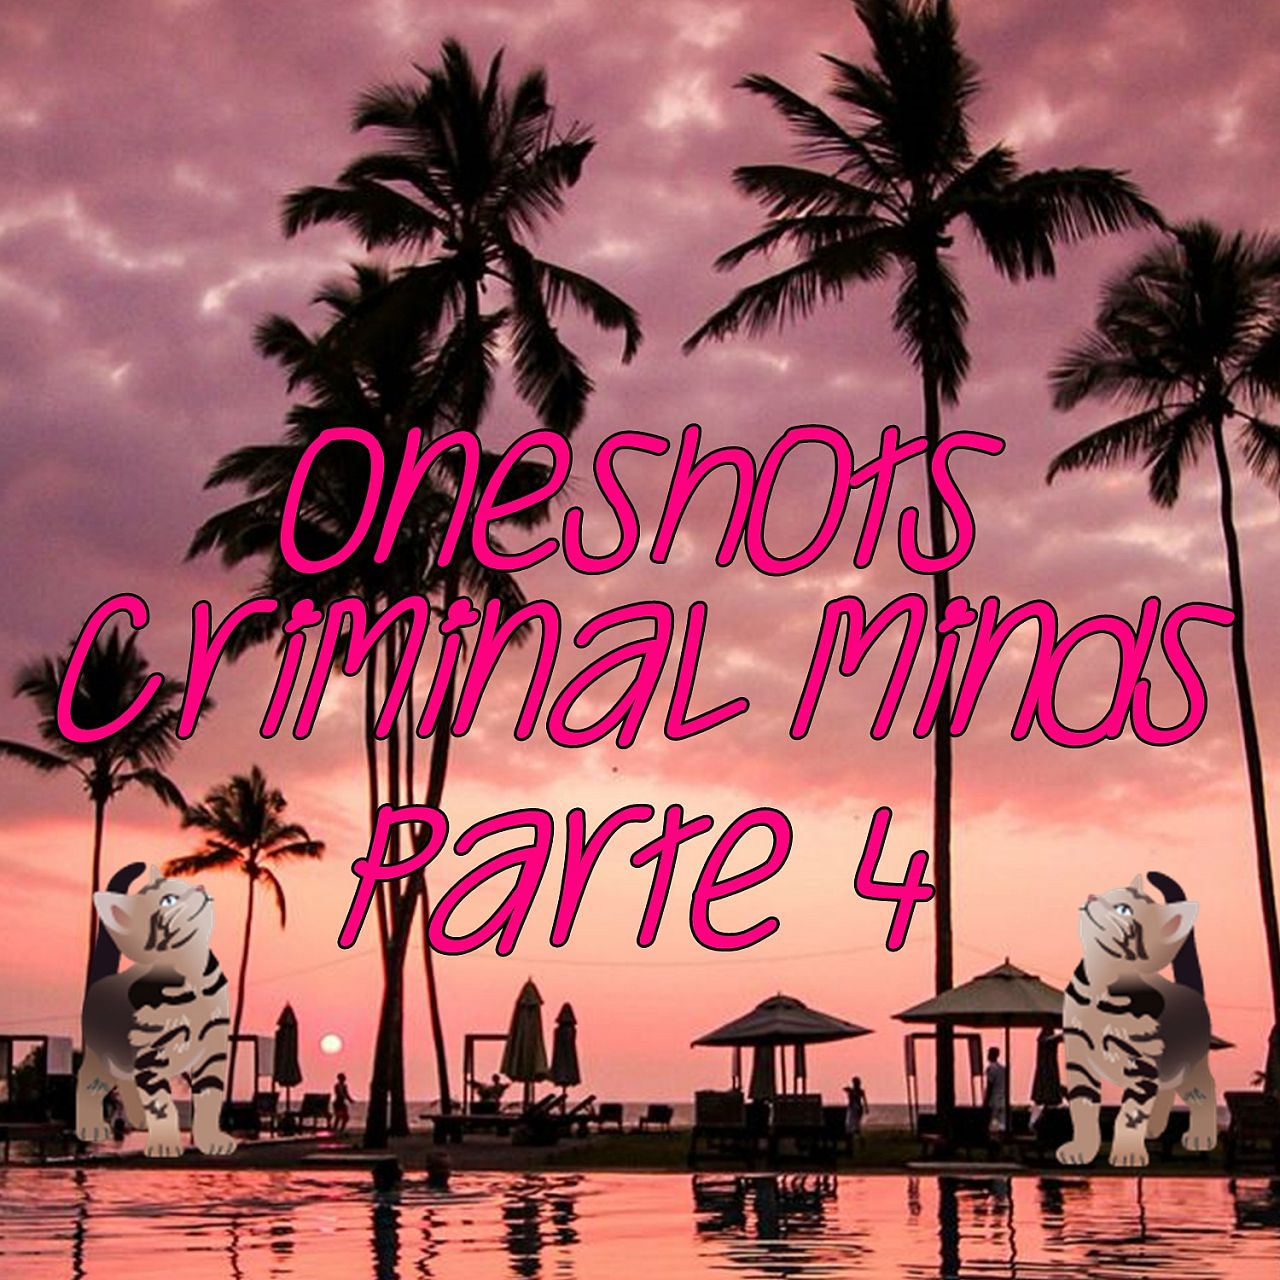 Oneshots Criminal minds Parte 4